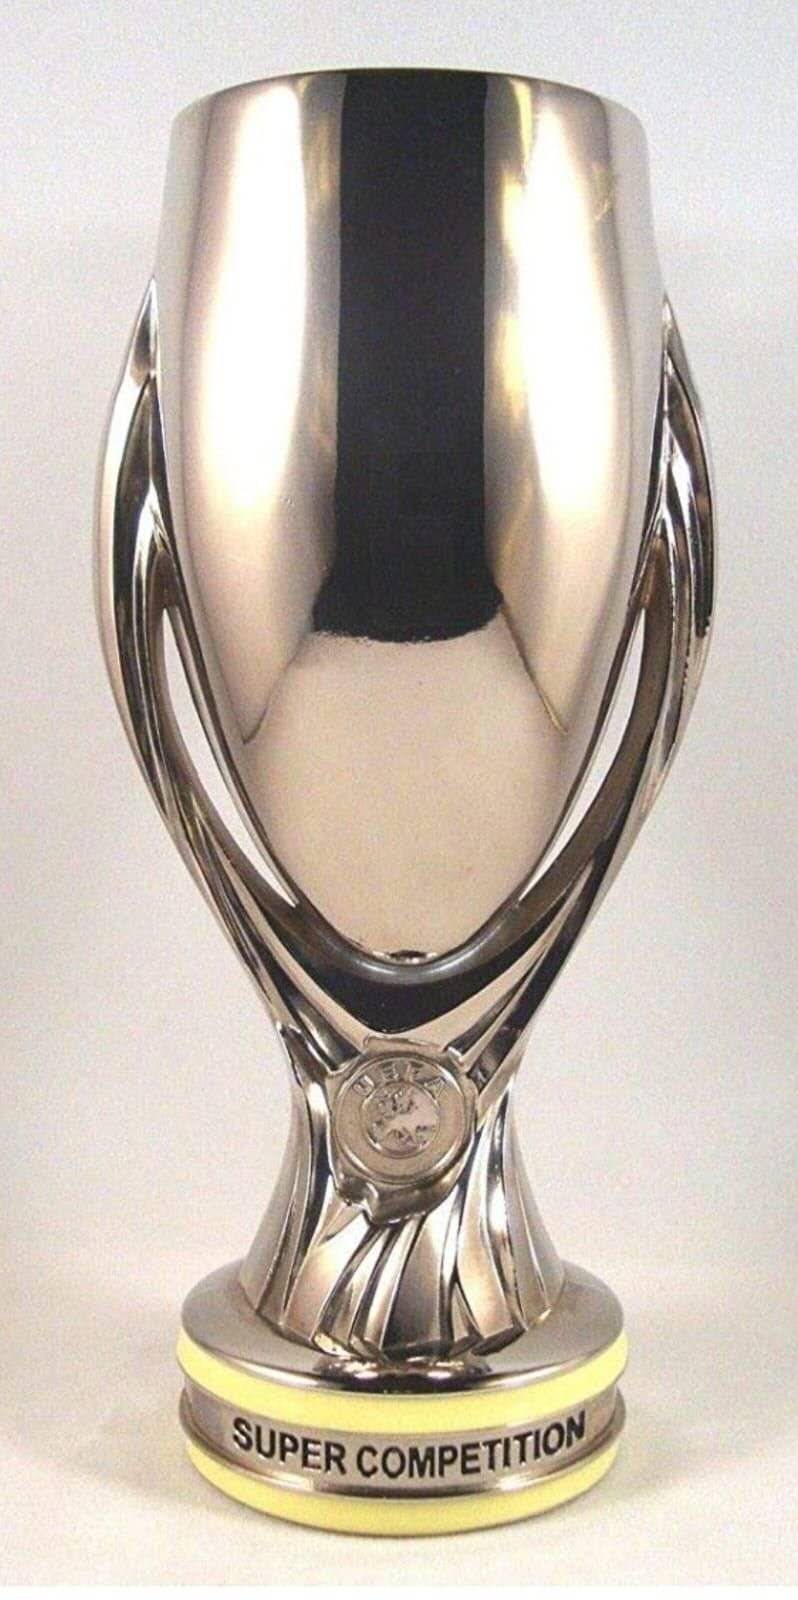 Member exclusive European Super Cup of Reche, Seal West Bairen, Europe, Football, Fans, Decoration (1627207:108466964:Color classification:超级杯 46公分)